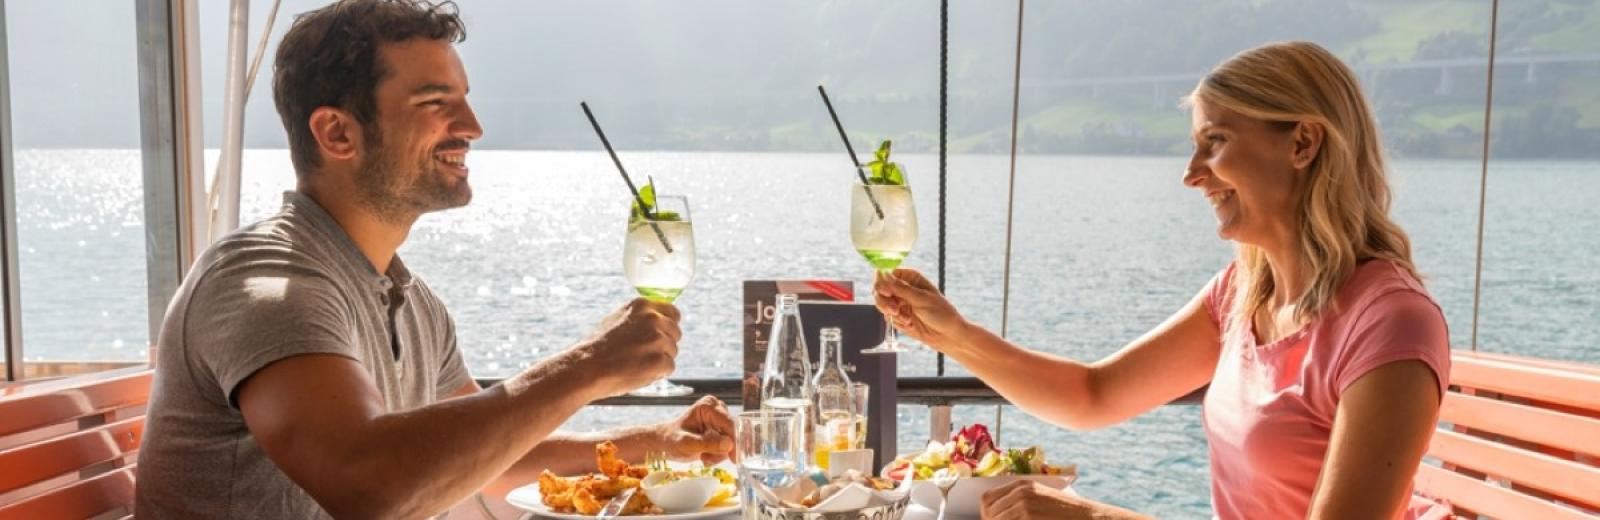 Una pareja disfruta de la comida a bordo de un barco de vapor, Lago de Lucerna, Suiza Central © Swiss Travel System AG, 2019, Fotografía: Daniel Ammann.